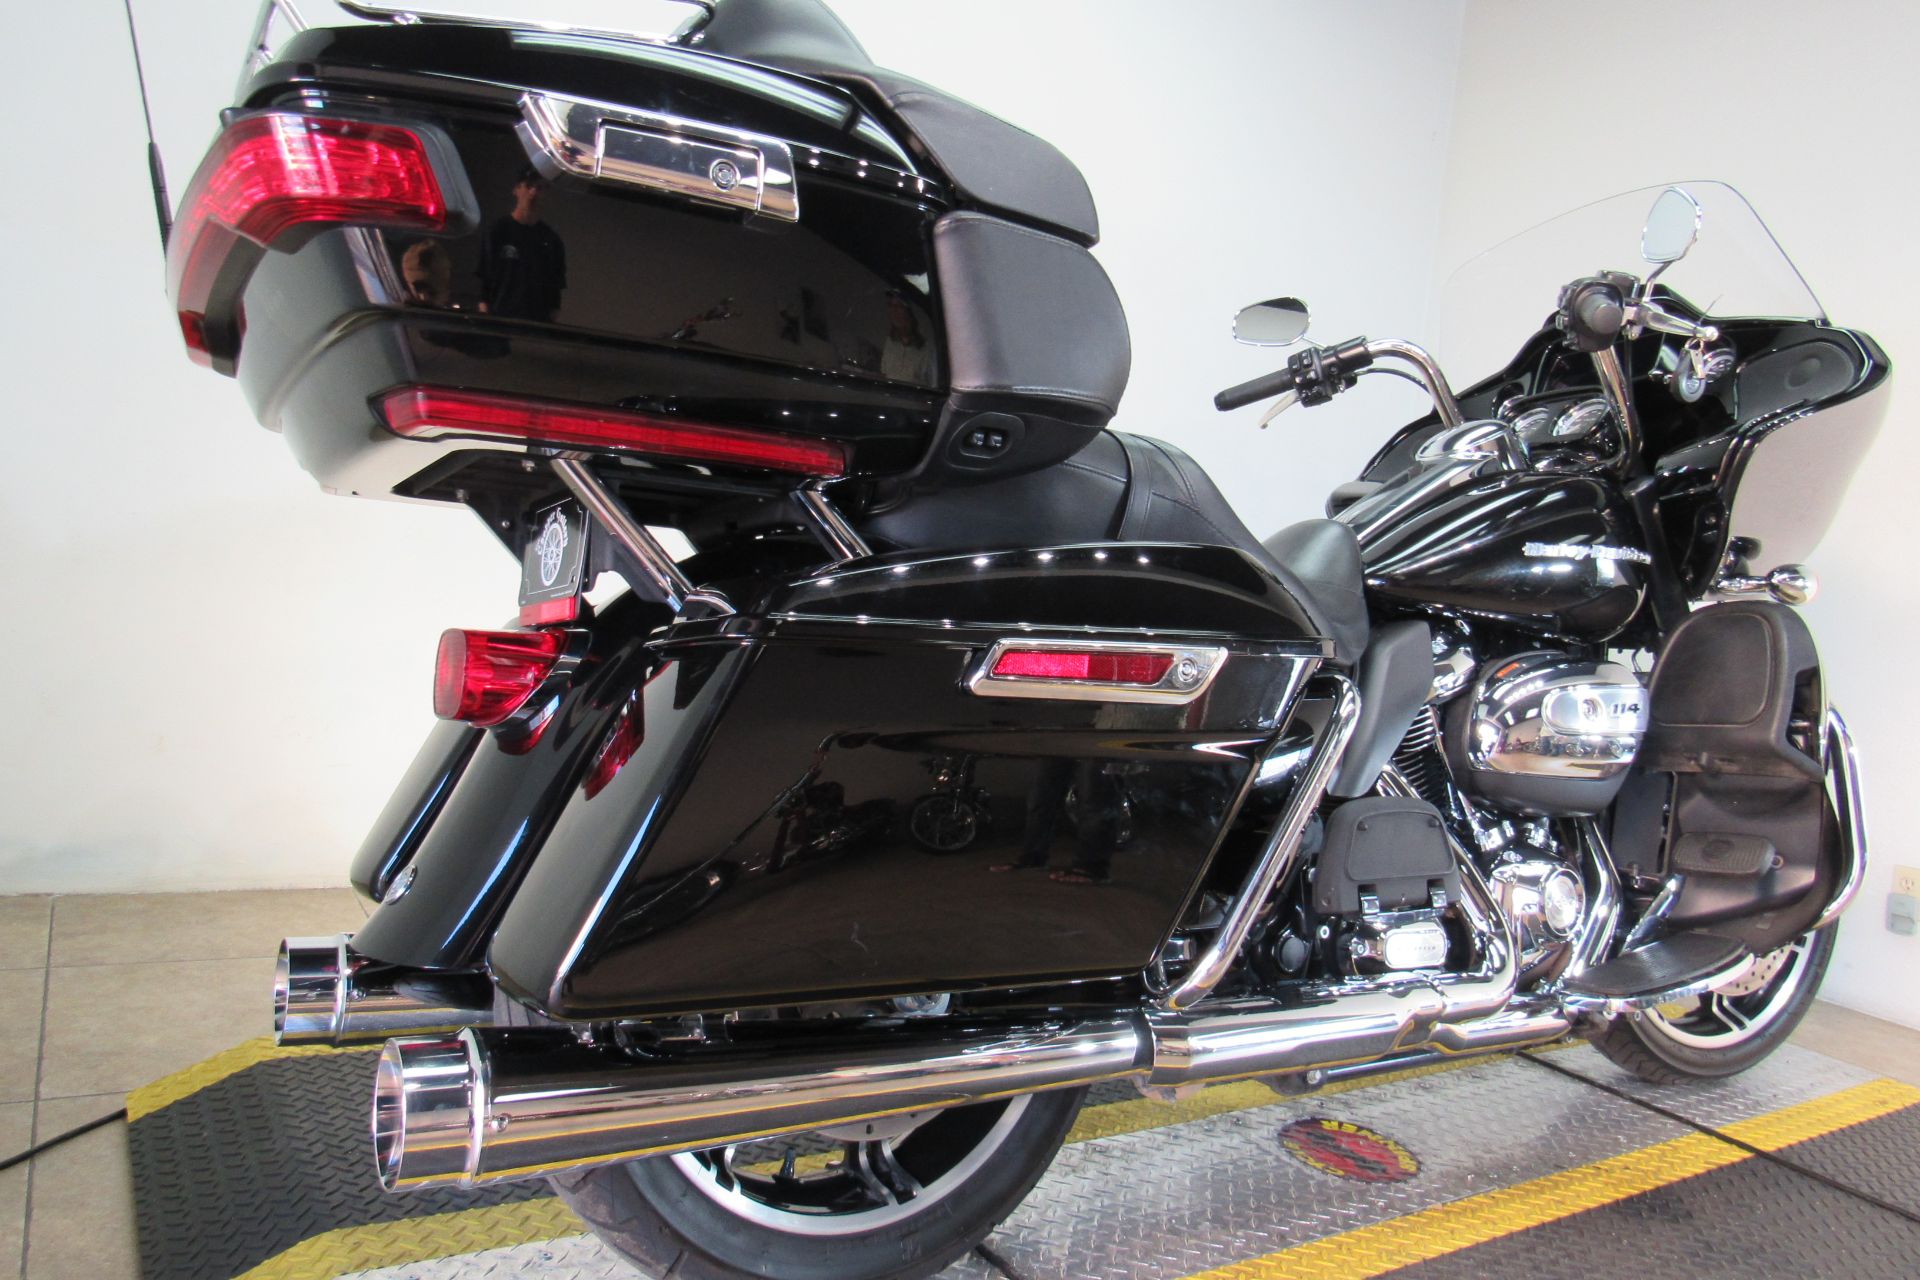 2021 Harley-Davidson Road Glide® Limited in Temecula, California - Photo 37